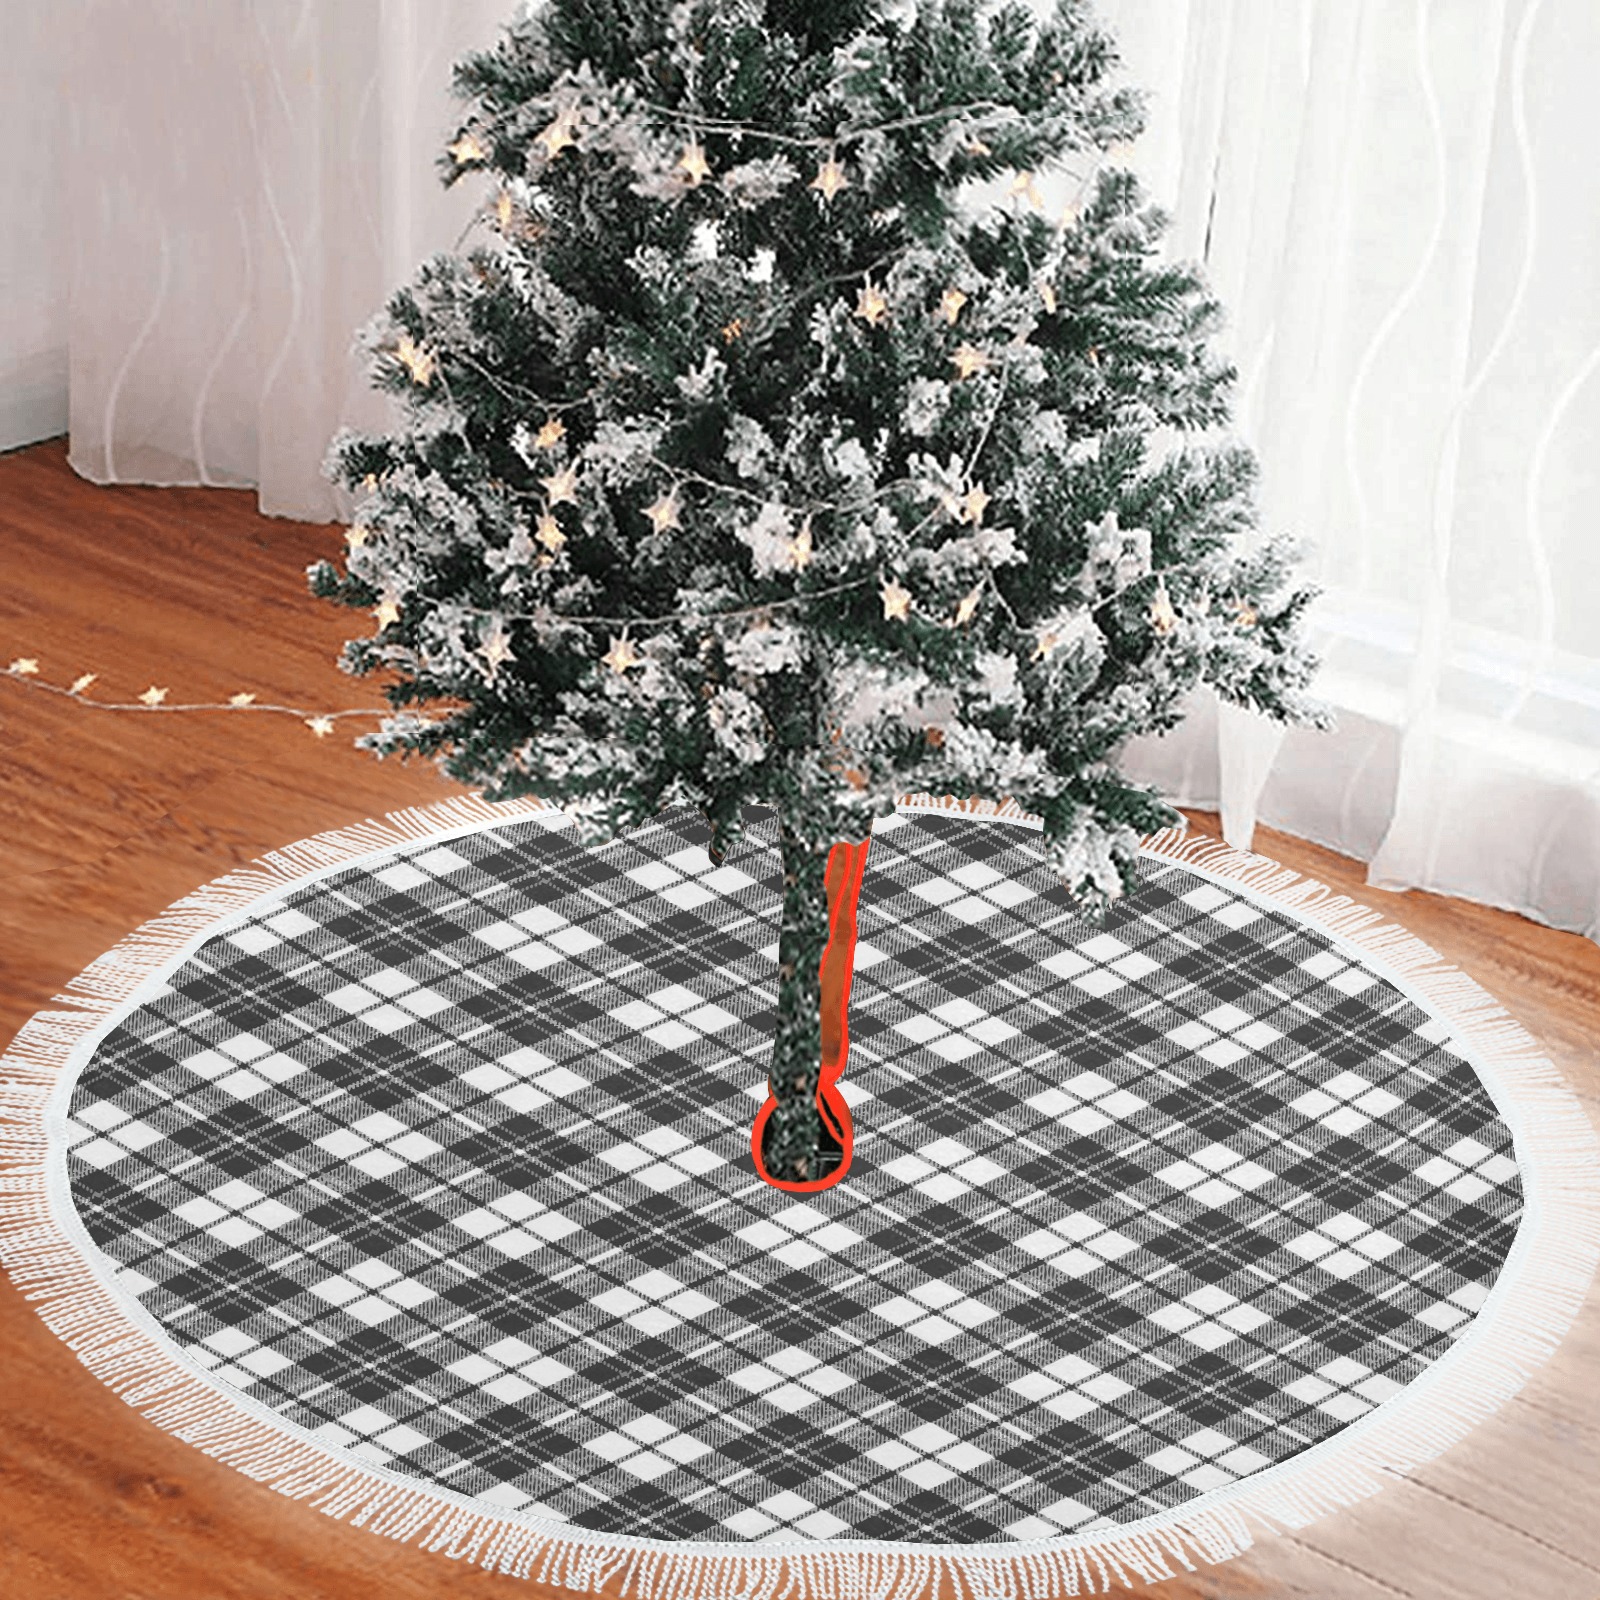 Tartan black white pattern holidays Christmas xmas elegant lines geometric cool fun classic elegance Thick Fringe Christmas Tree Skirt 60"x60"